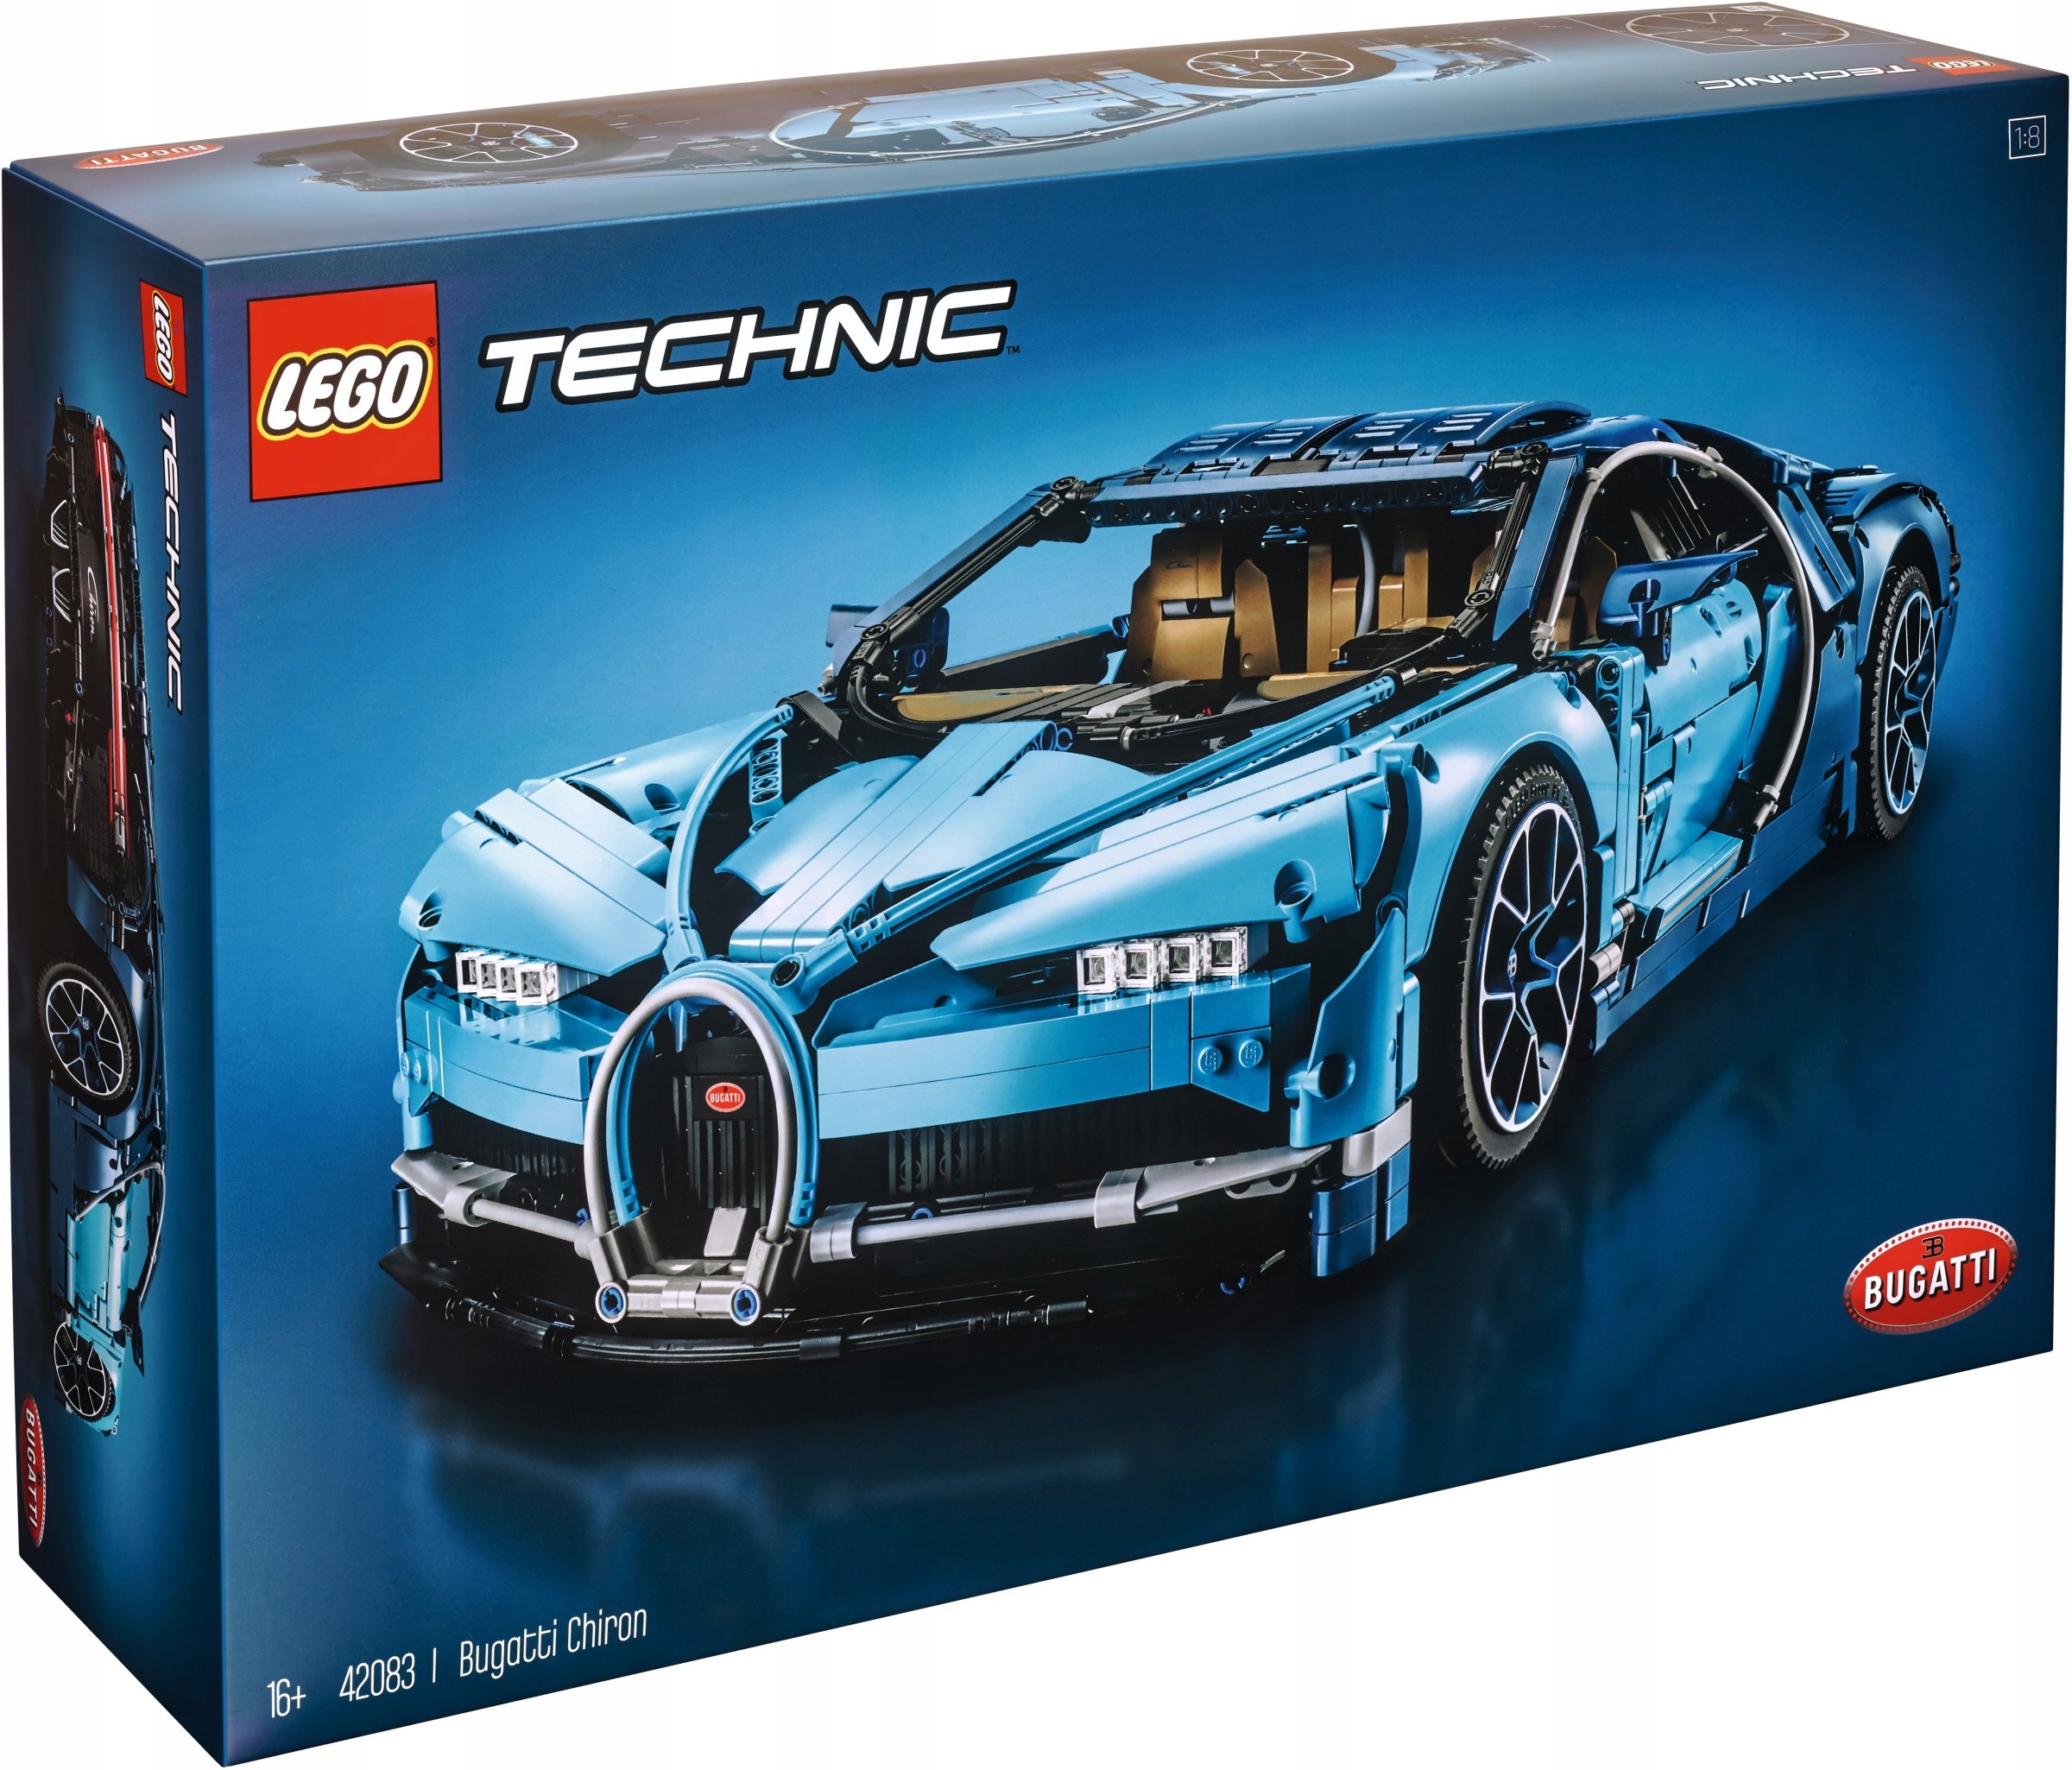 LEGO TECHNIC BUGATTI Chiron (42083) Box And Instructions EUR 187